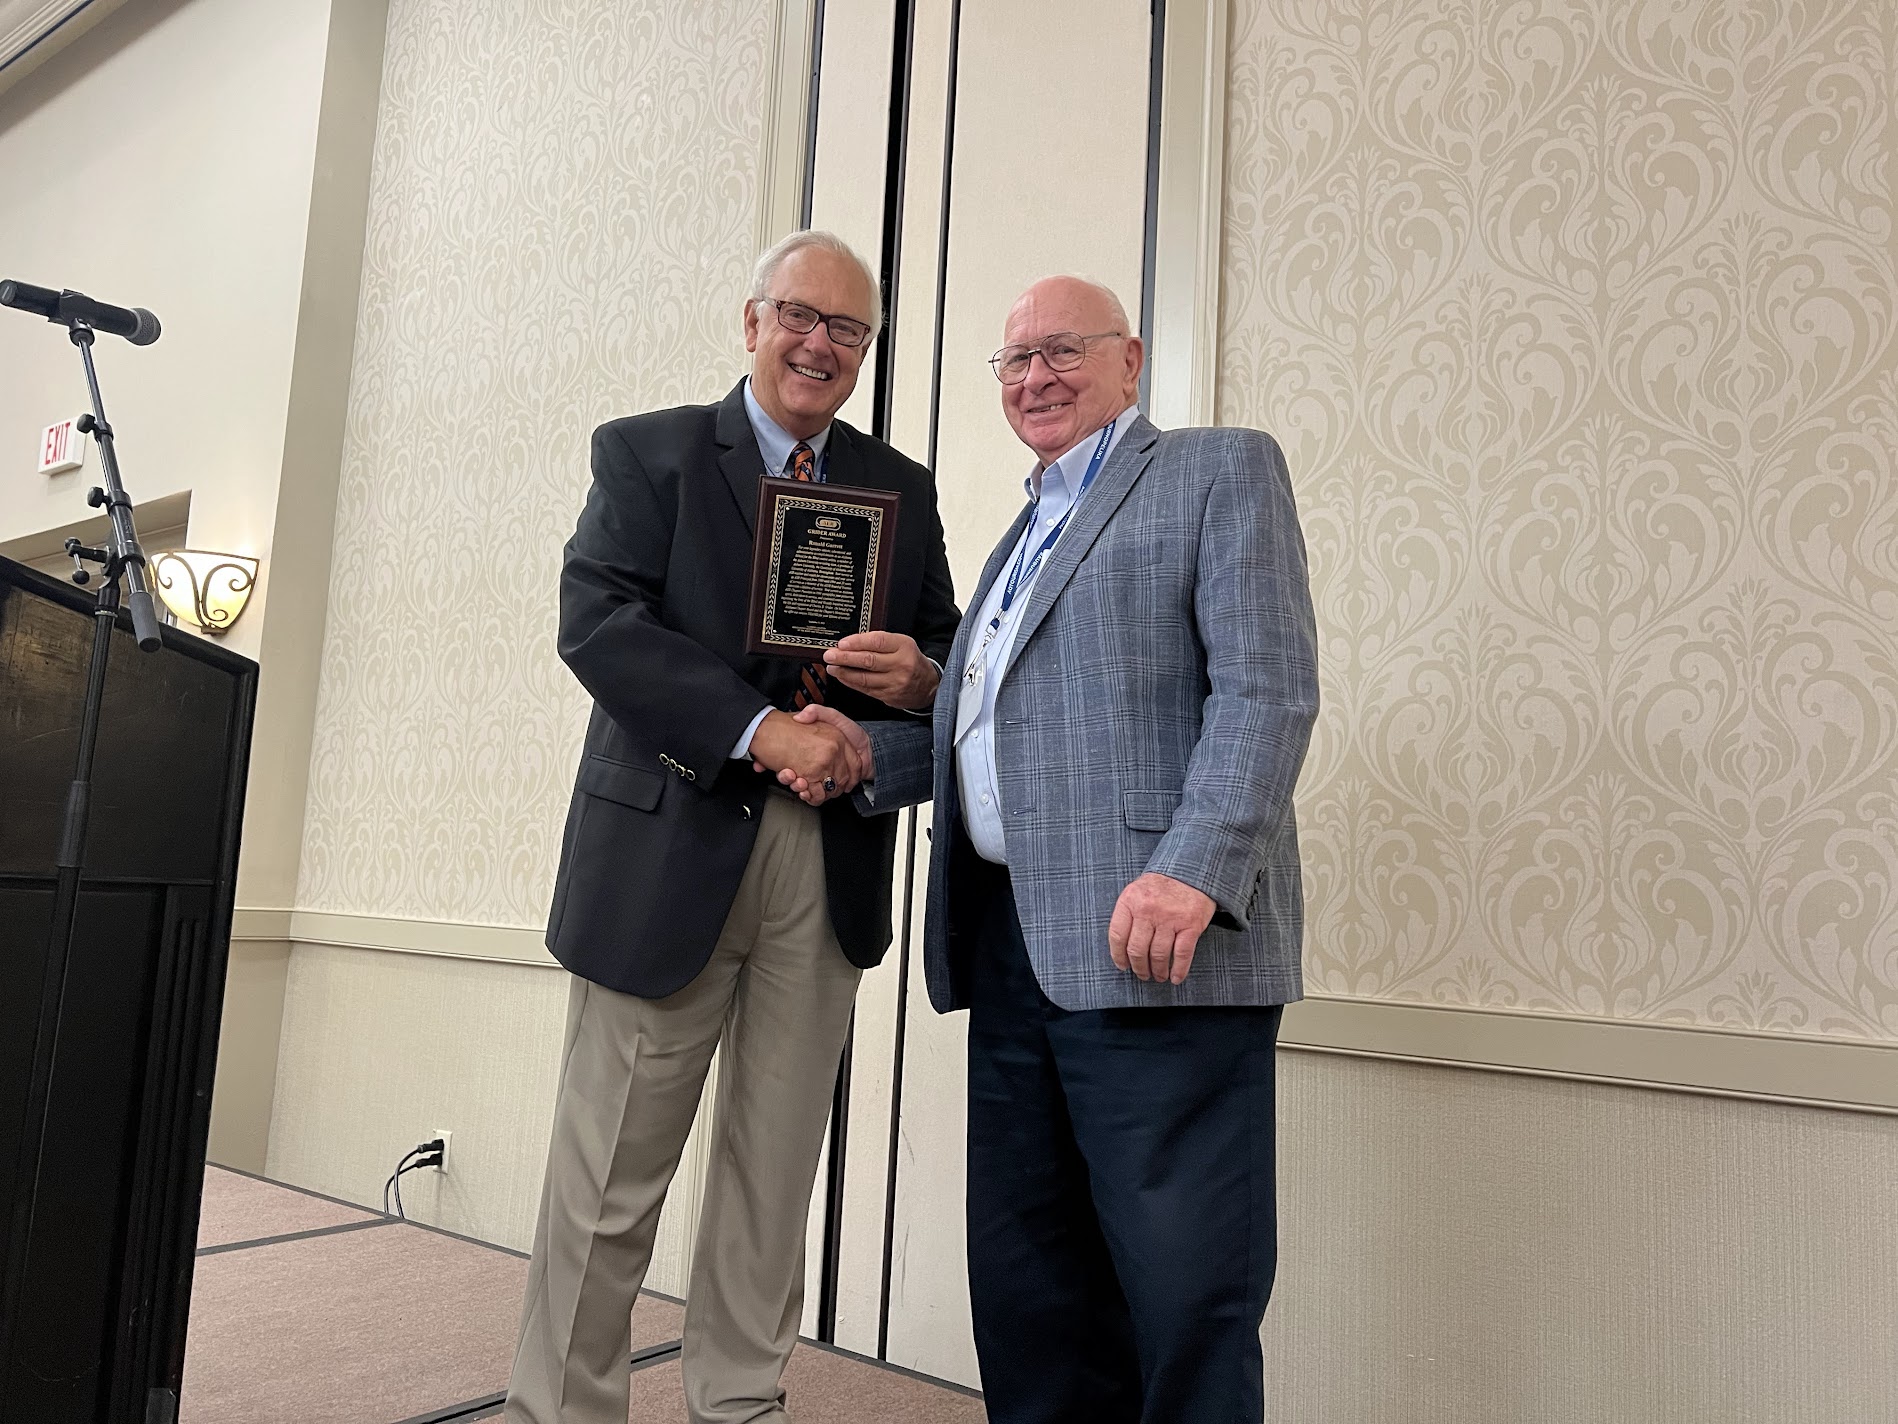 Joe Helm presents Mr. Garrett the Charles B. Grider Award